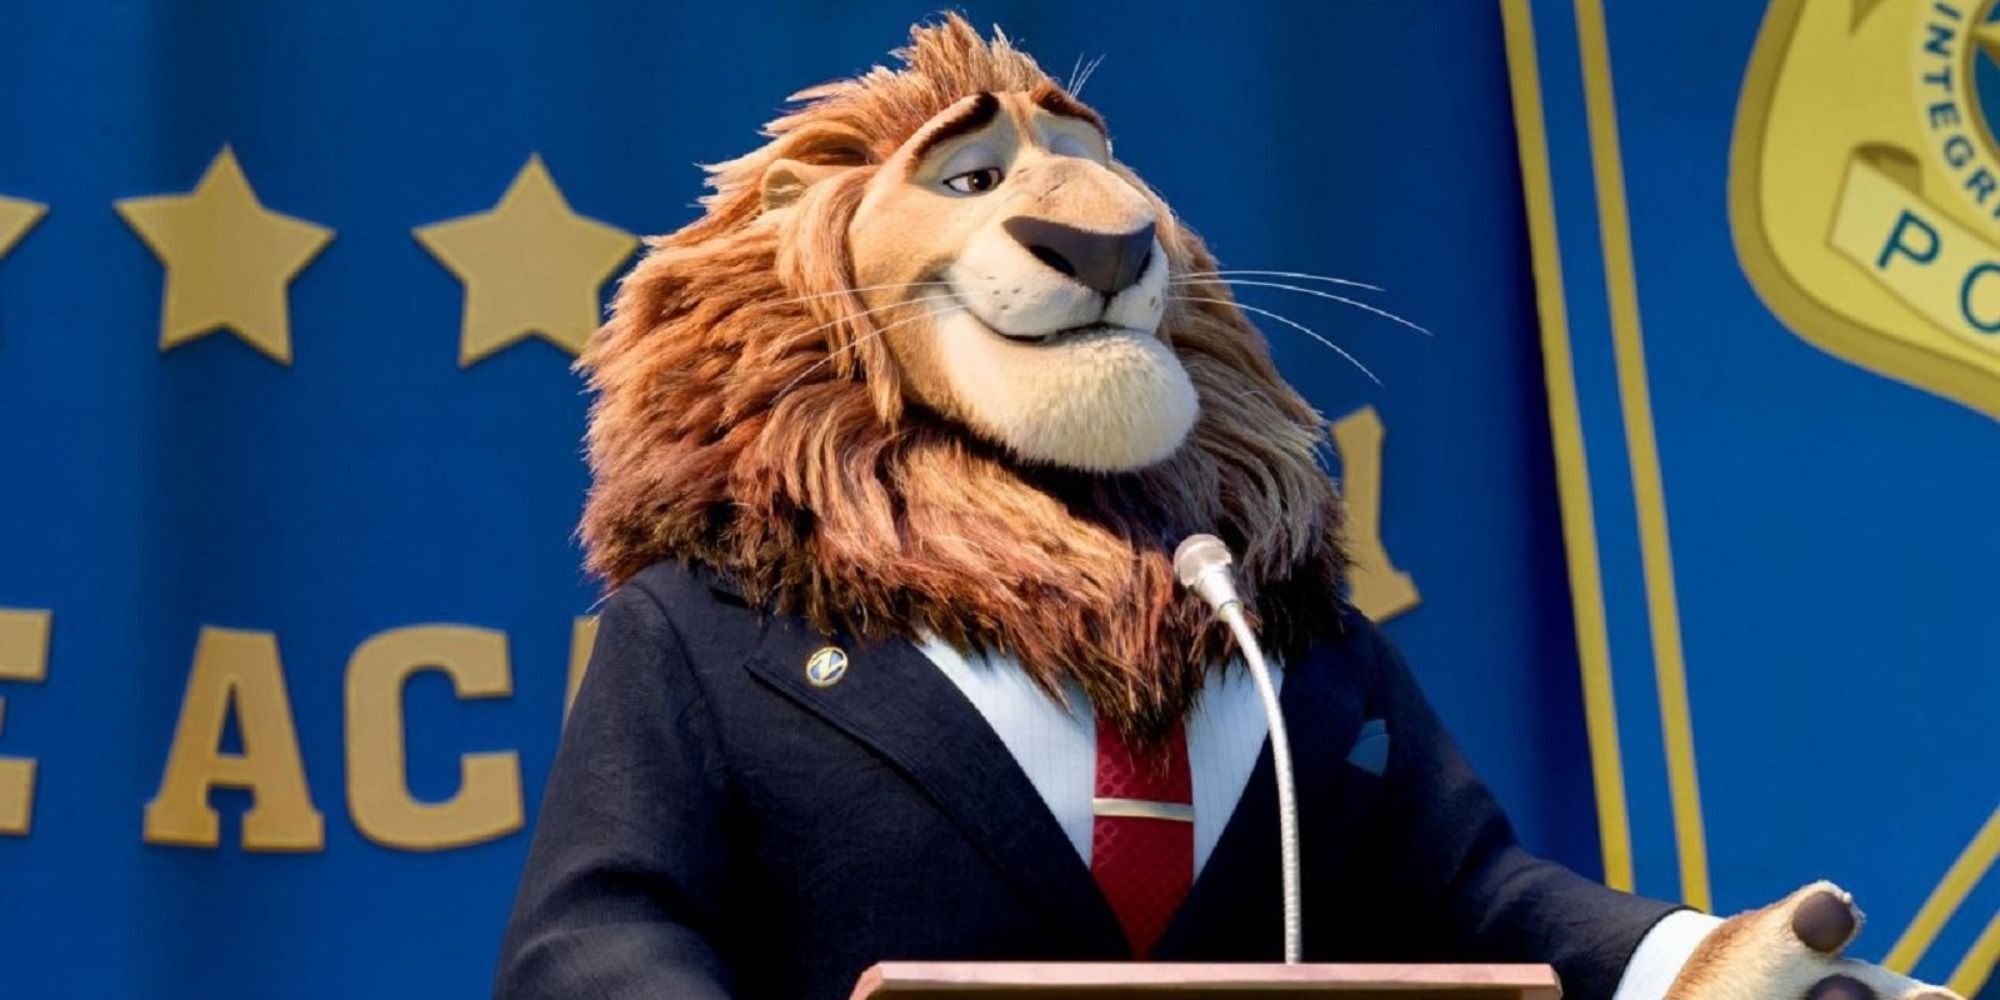 Mayor Lionheart gives a speech in Zootopia